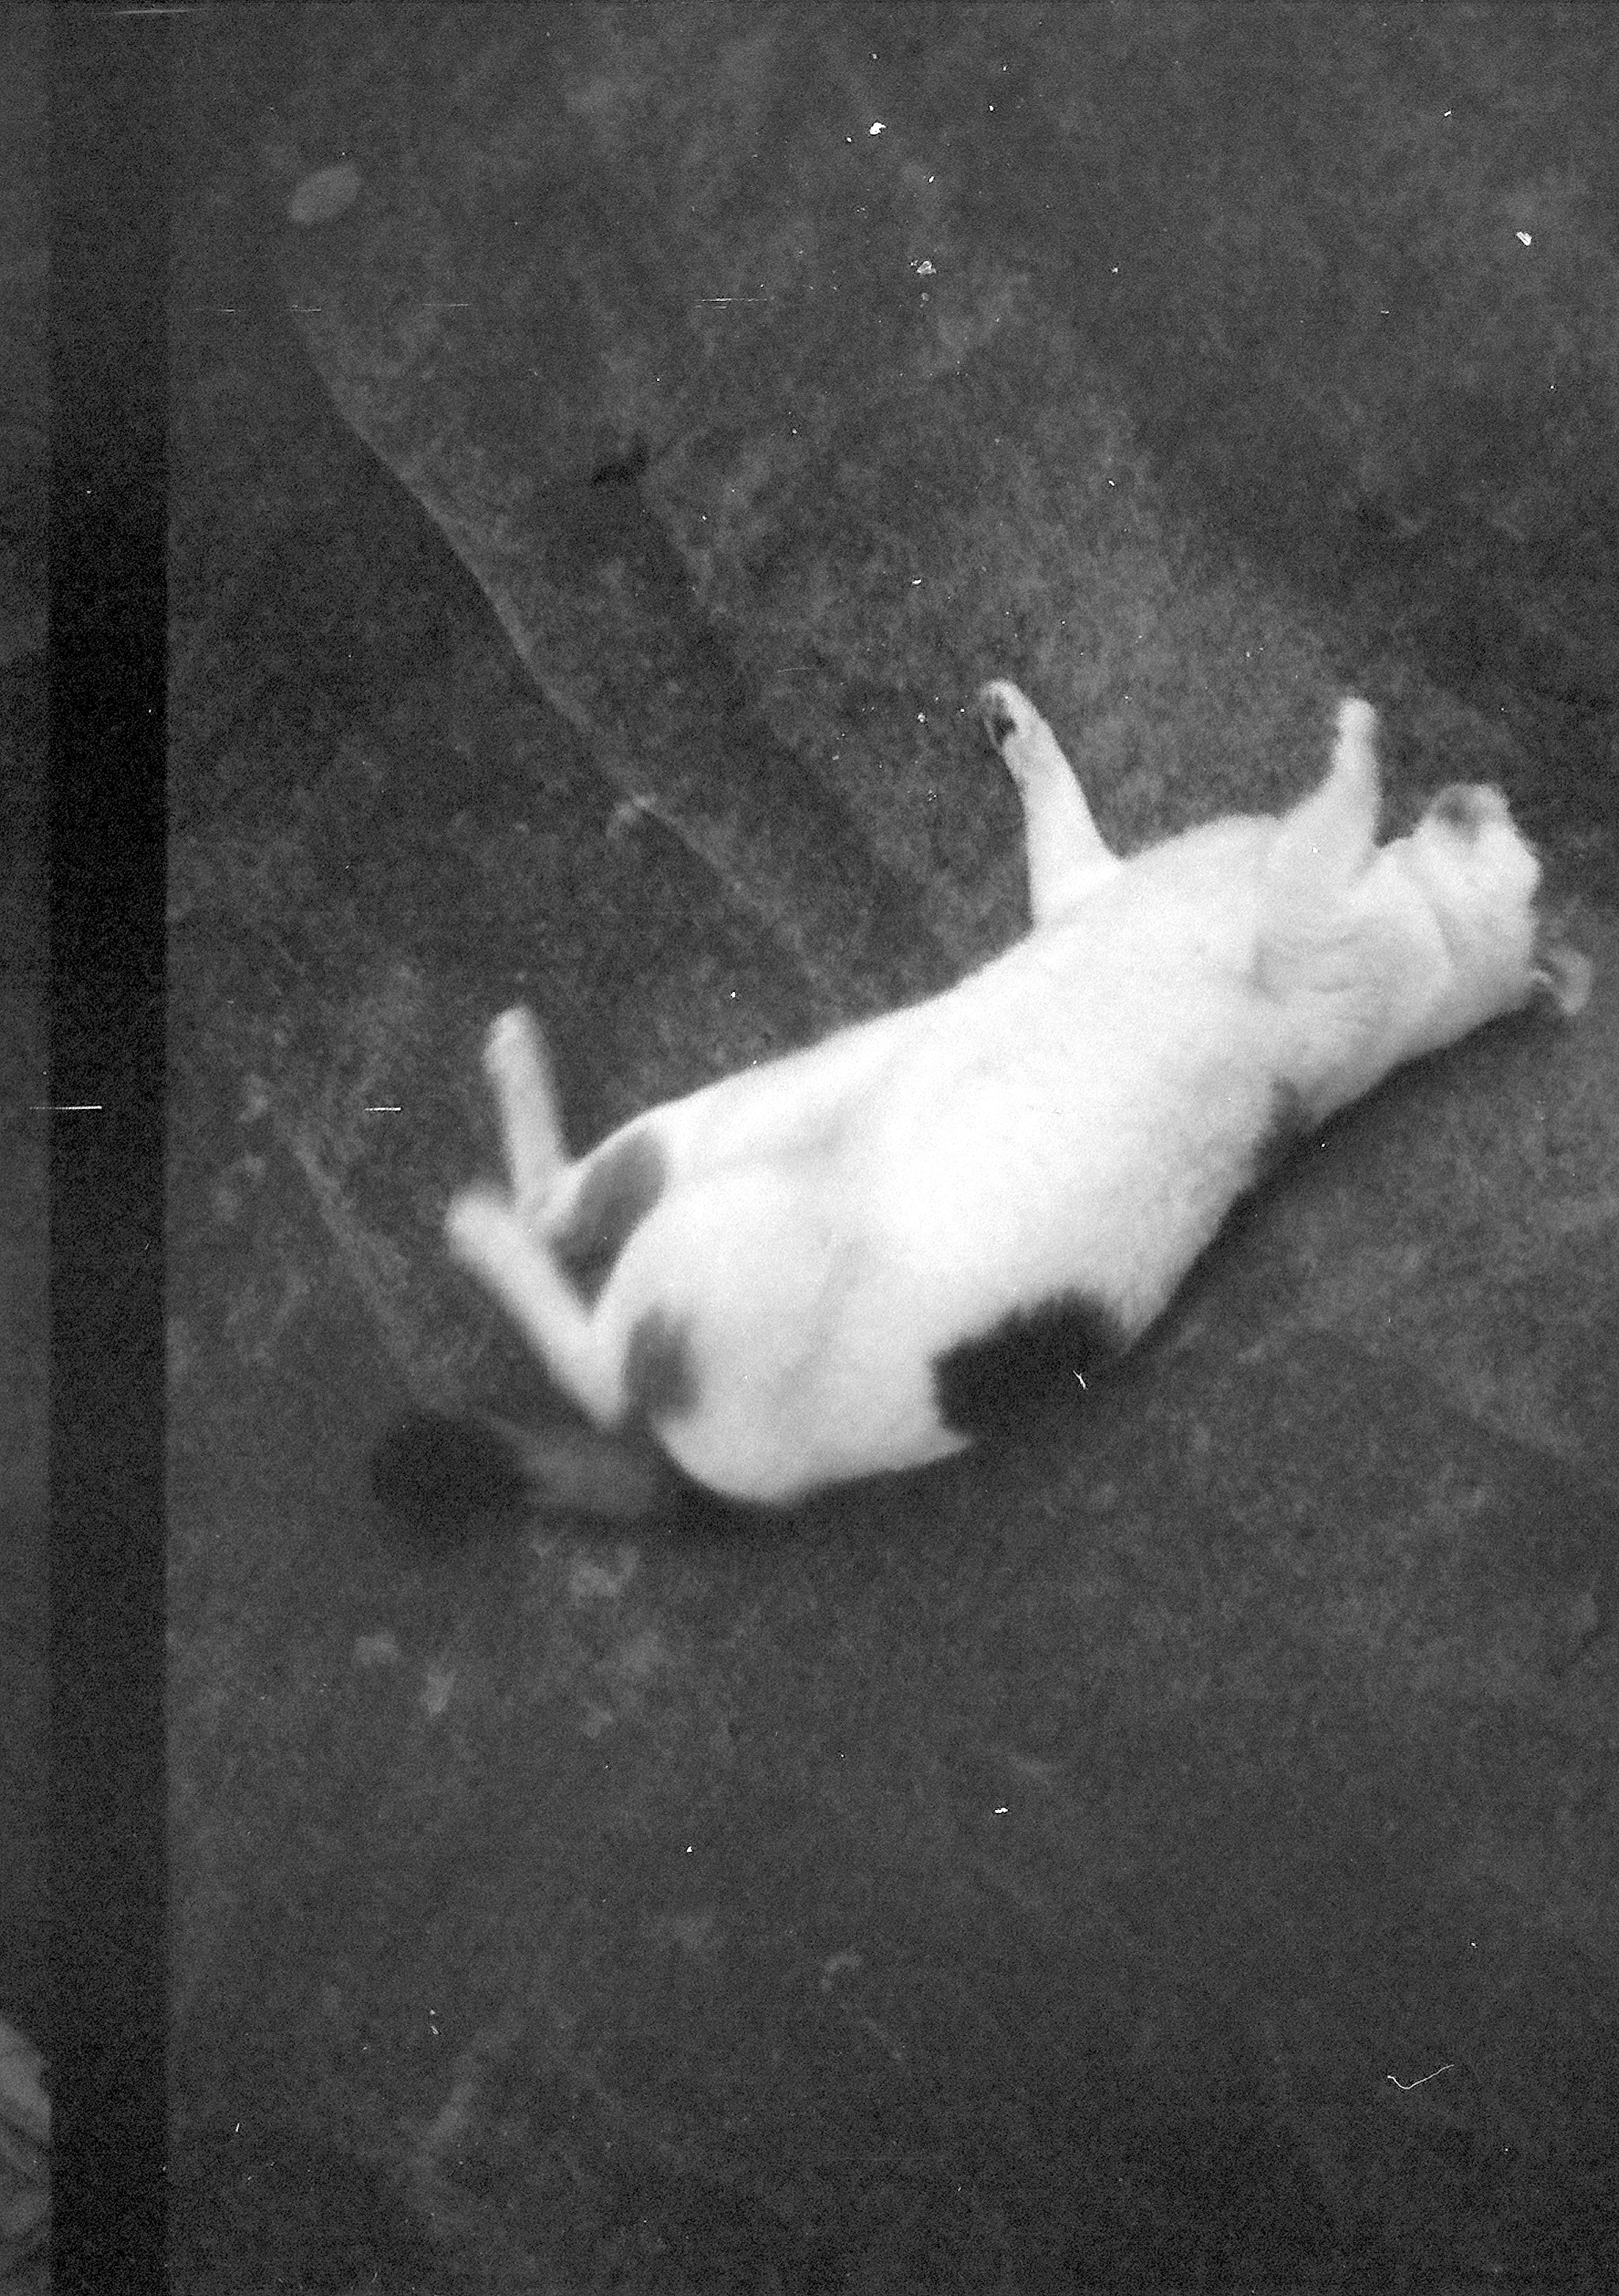 Cat rolling around on the ground.